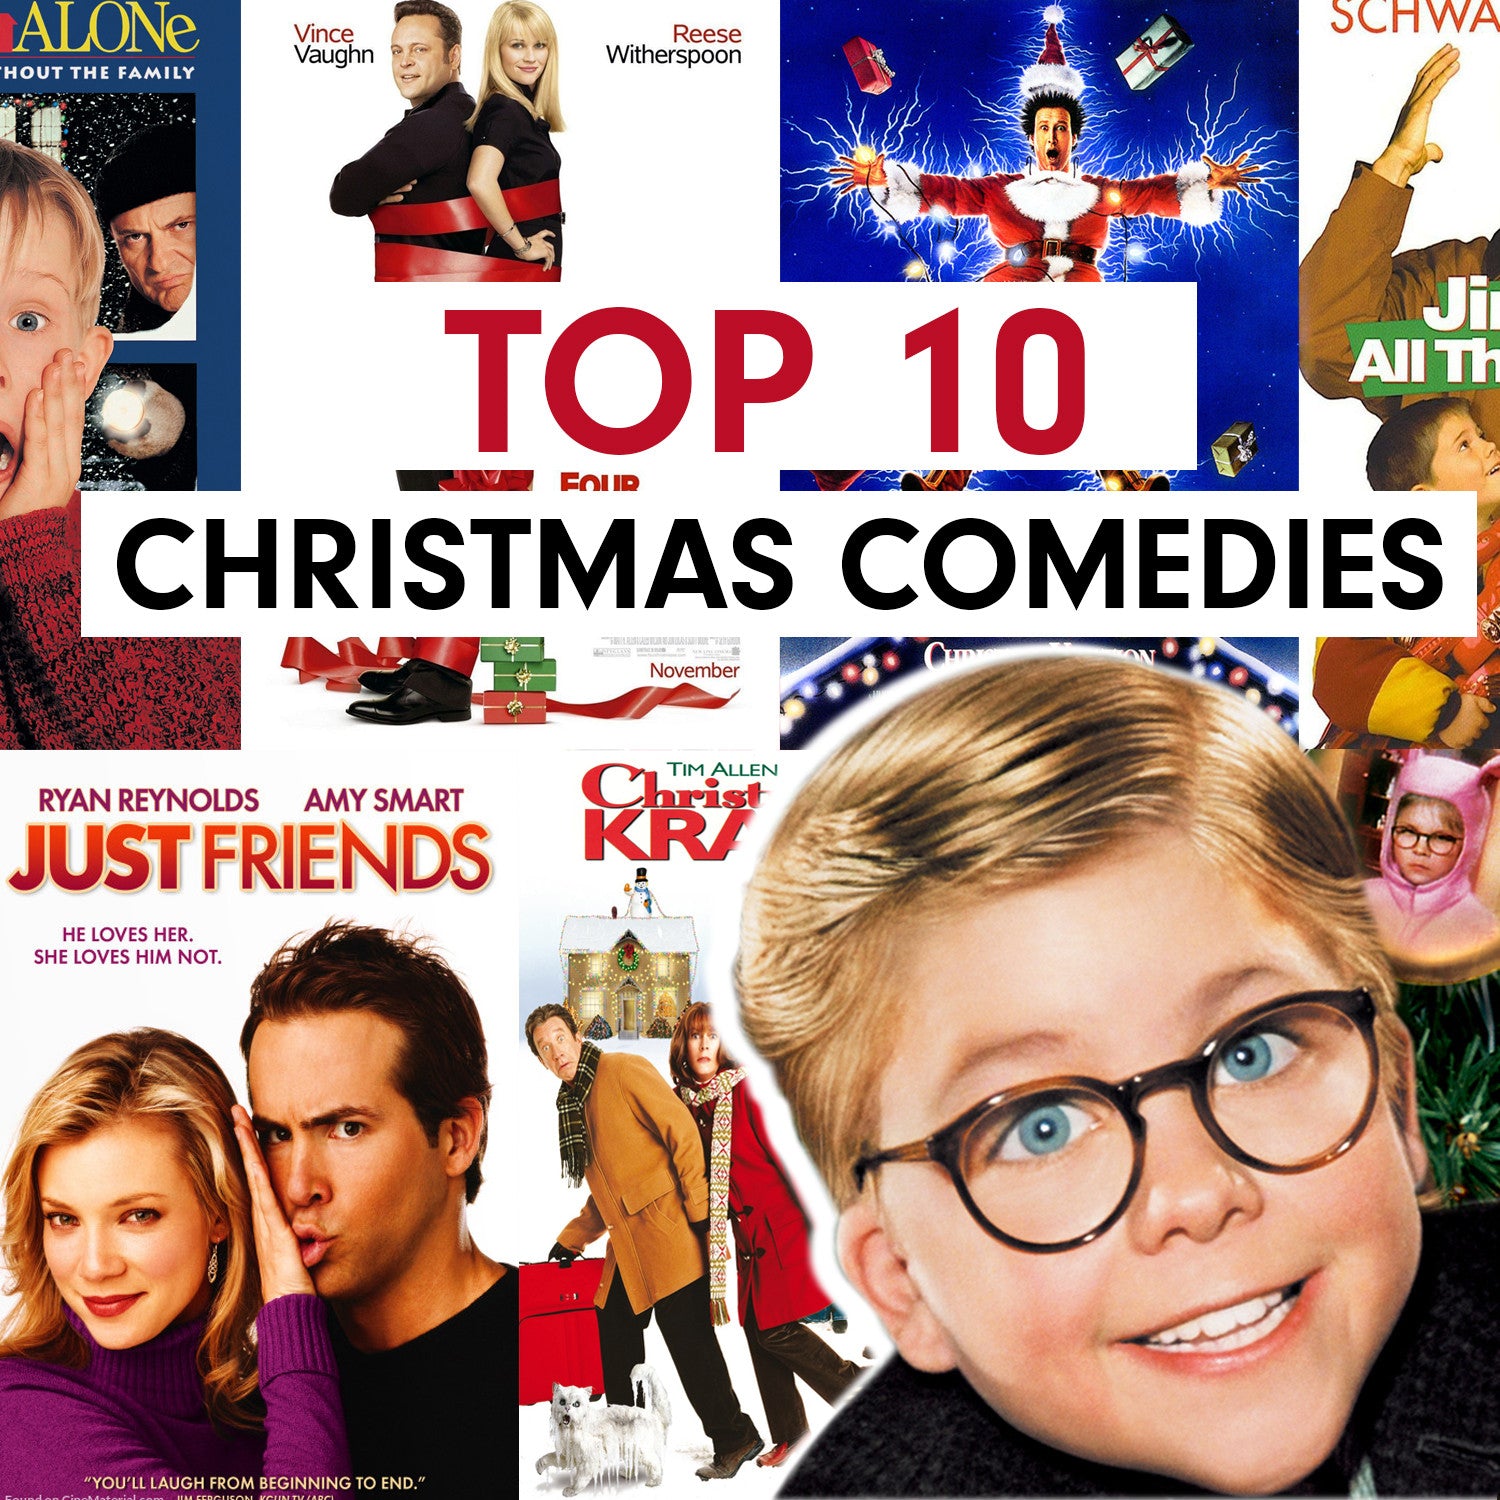 Top 10 Christmas Comedies